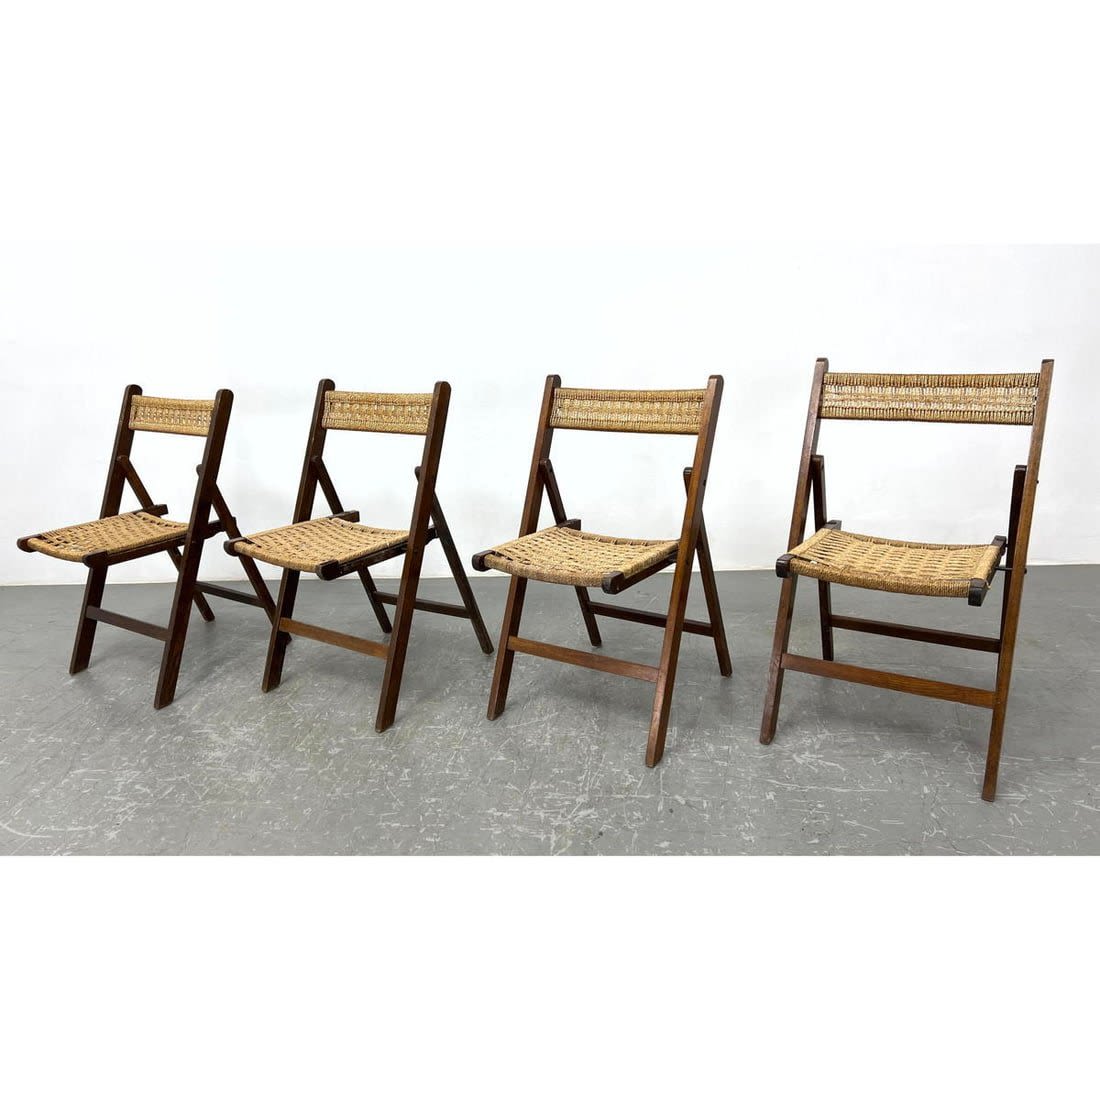 Set 4 Woven Rush Seats Wood Frame 3cf20a